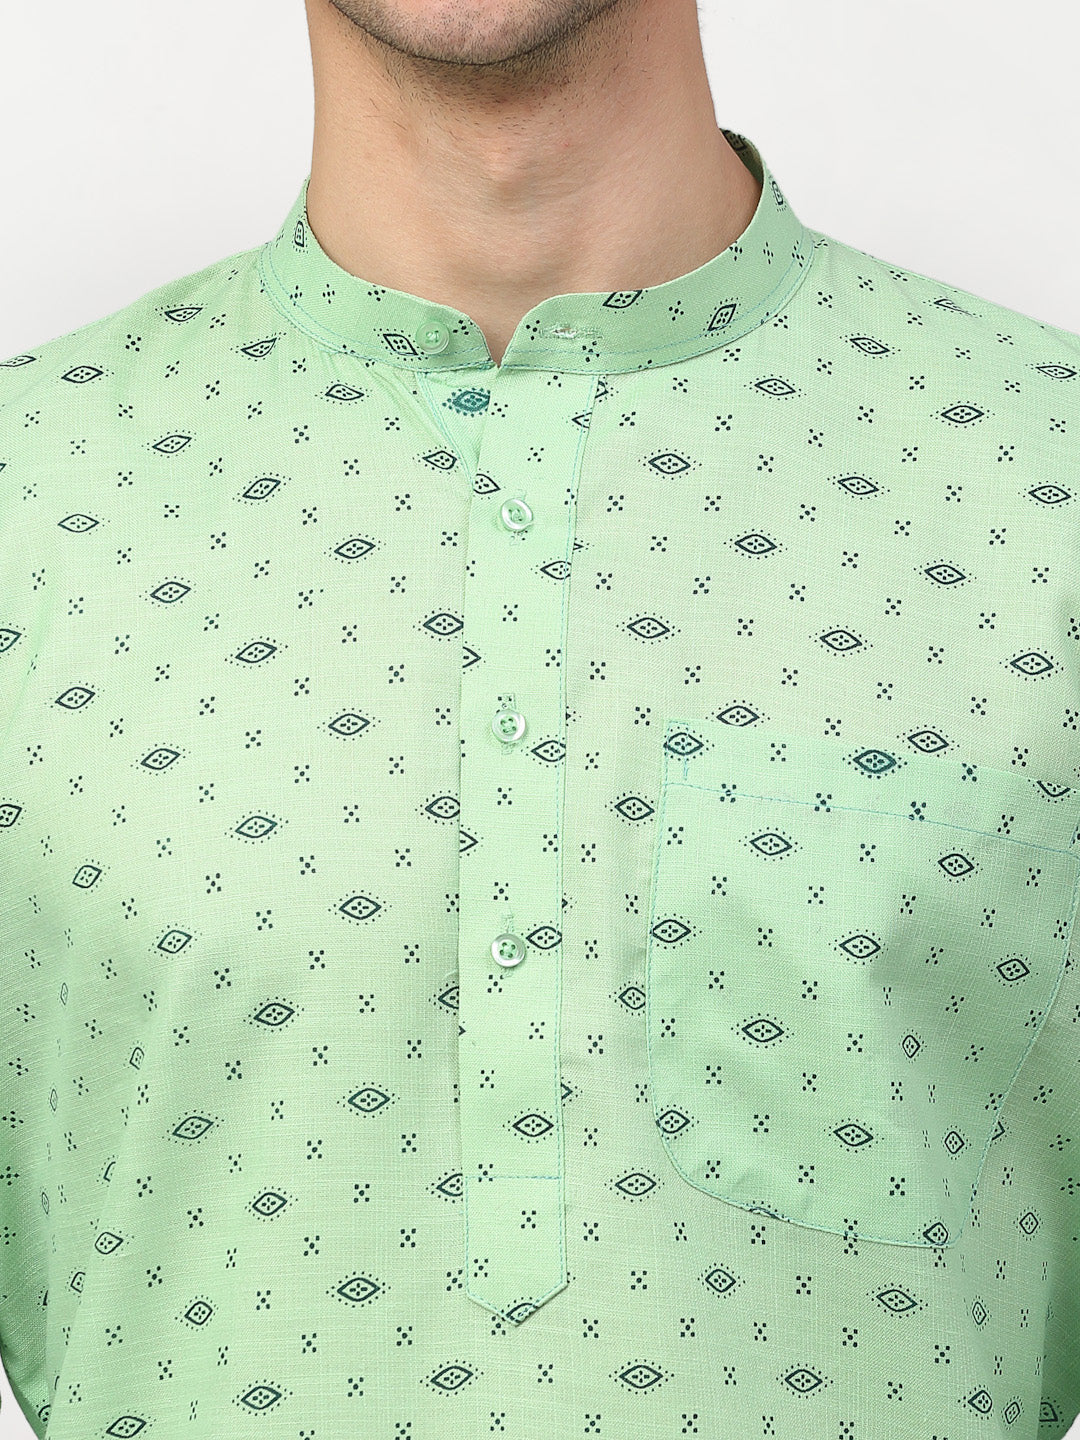 Men's Green Printed Cotton Kurta Only ( KO 614 Green ) - Virat Fashions